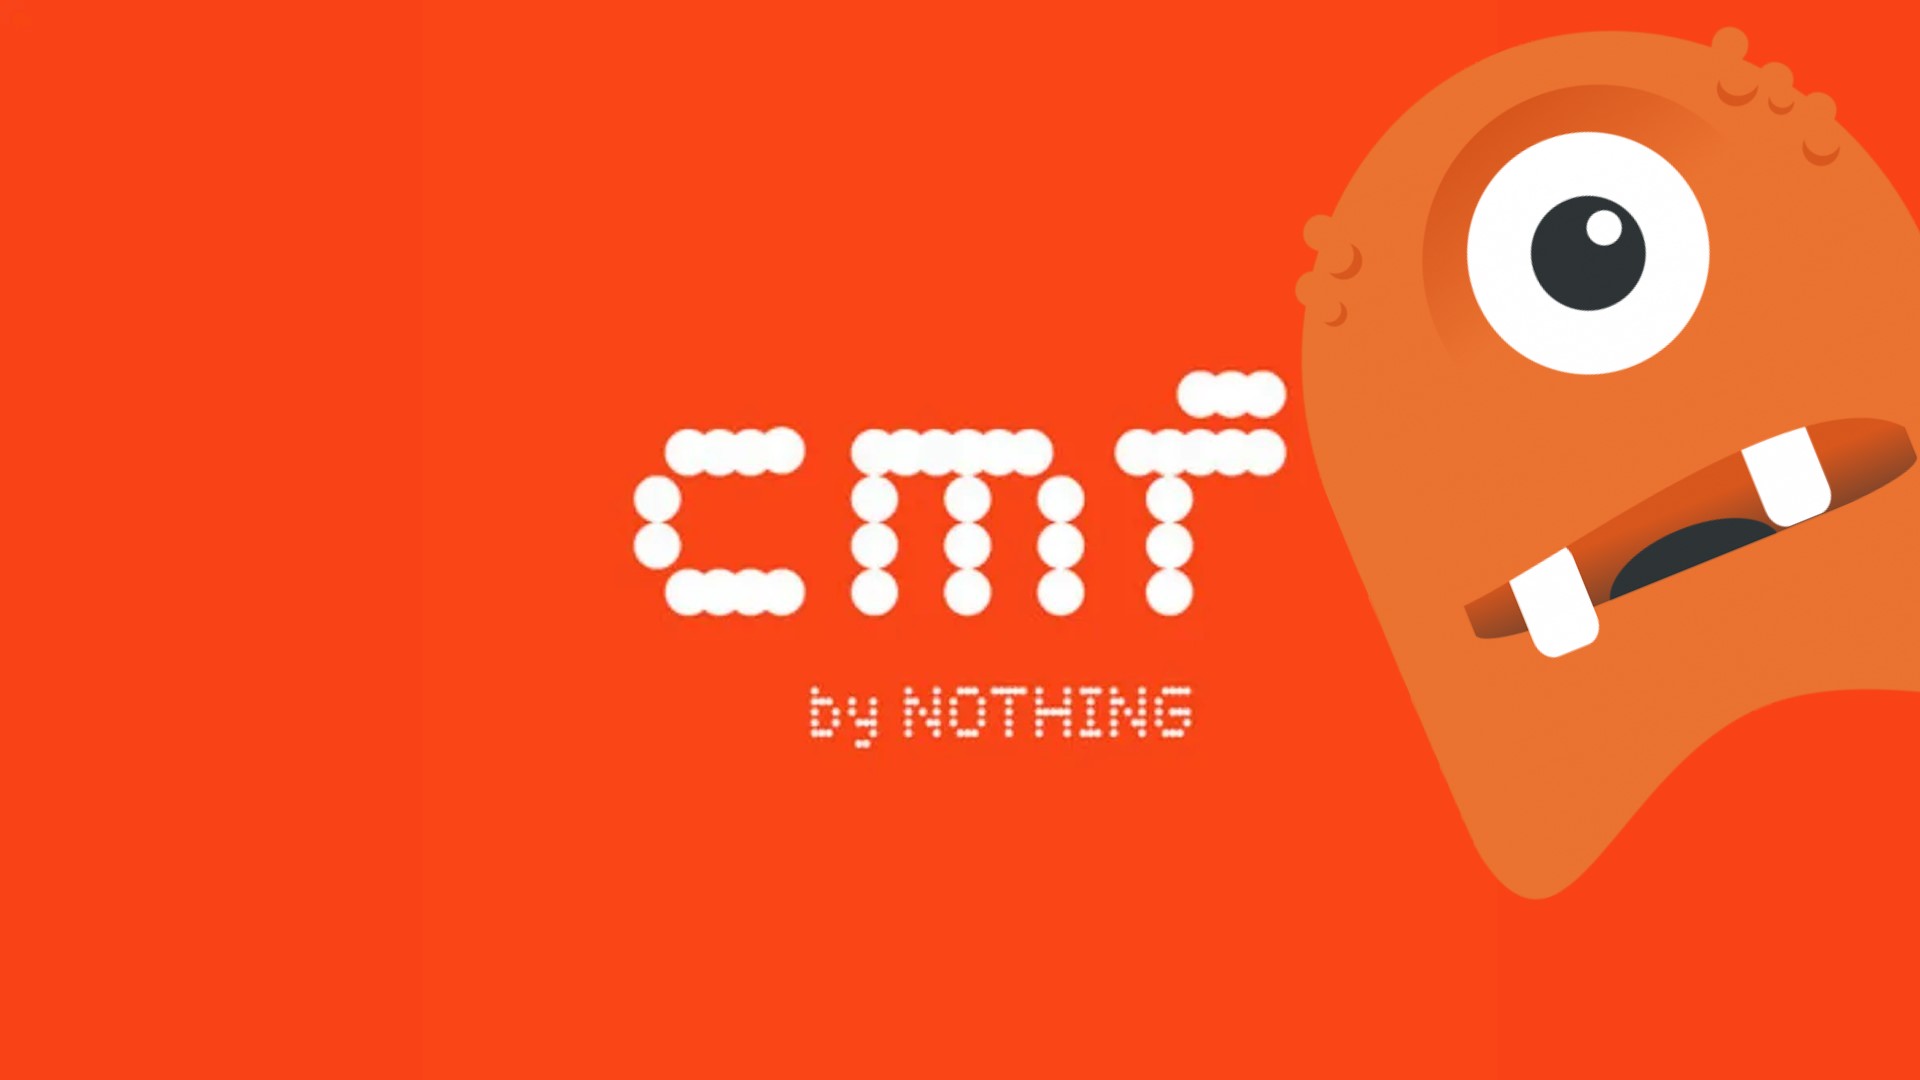 Logo CMF by Nothing